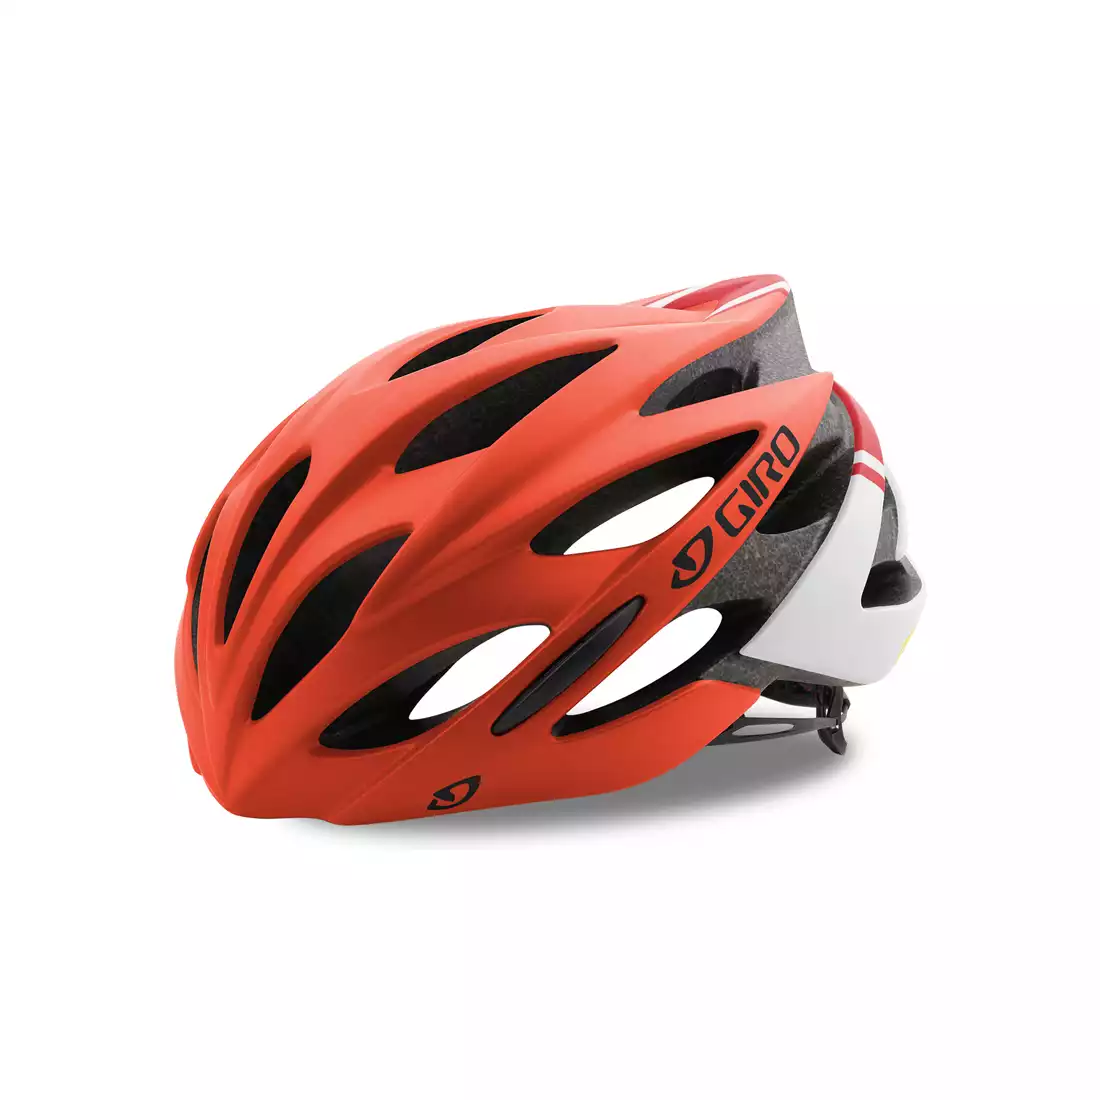 51-55 cm Matte Dark Red, Small Giro Savant MIPS Helmet